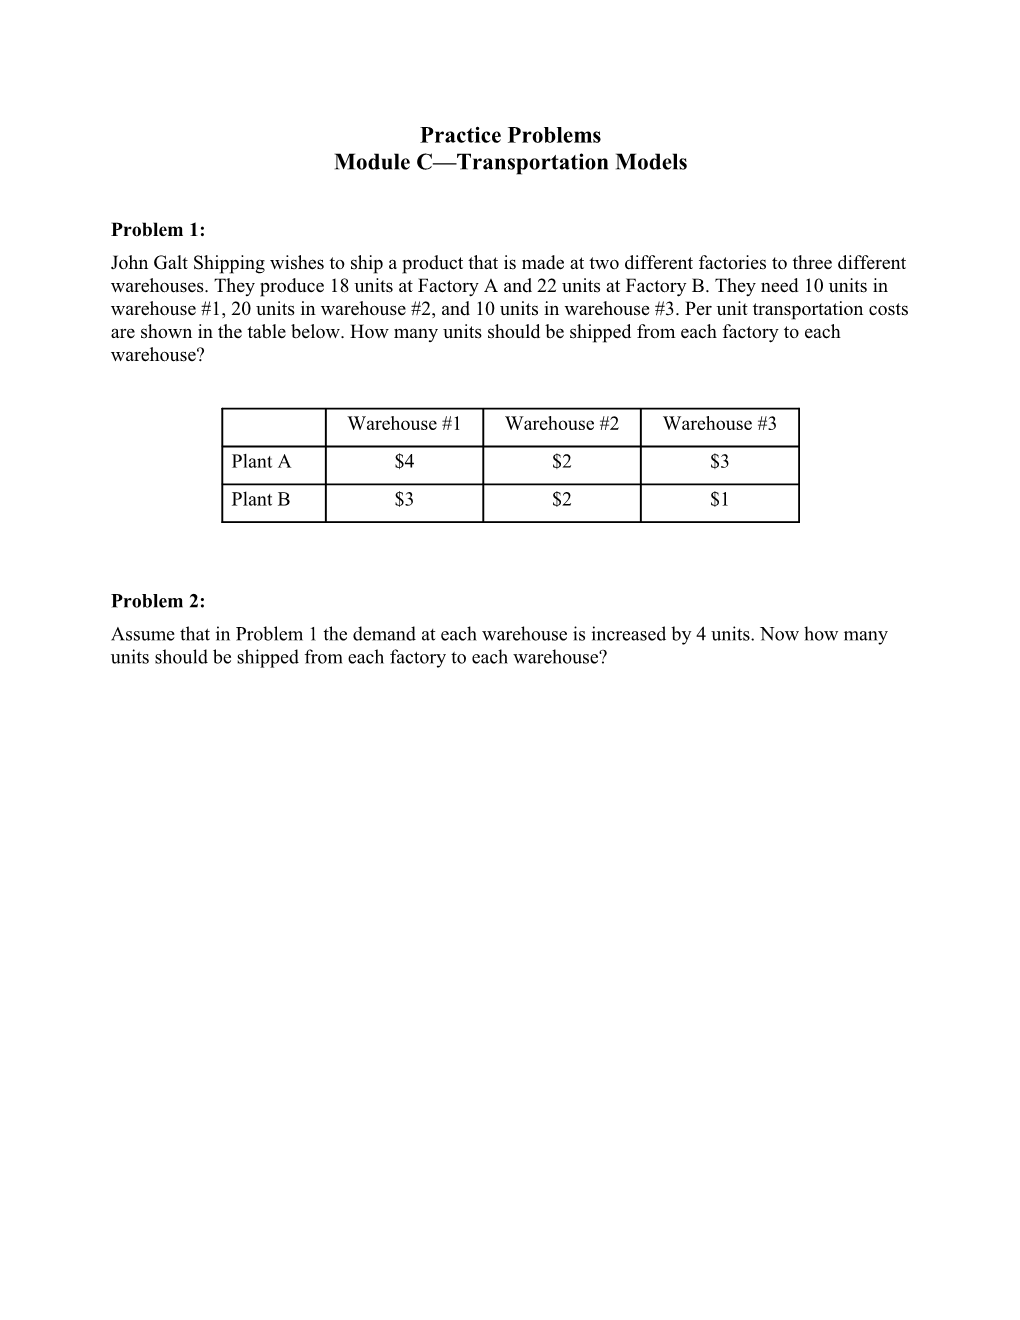 Practice Problems: Module C, Transportation Models